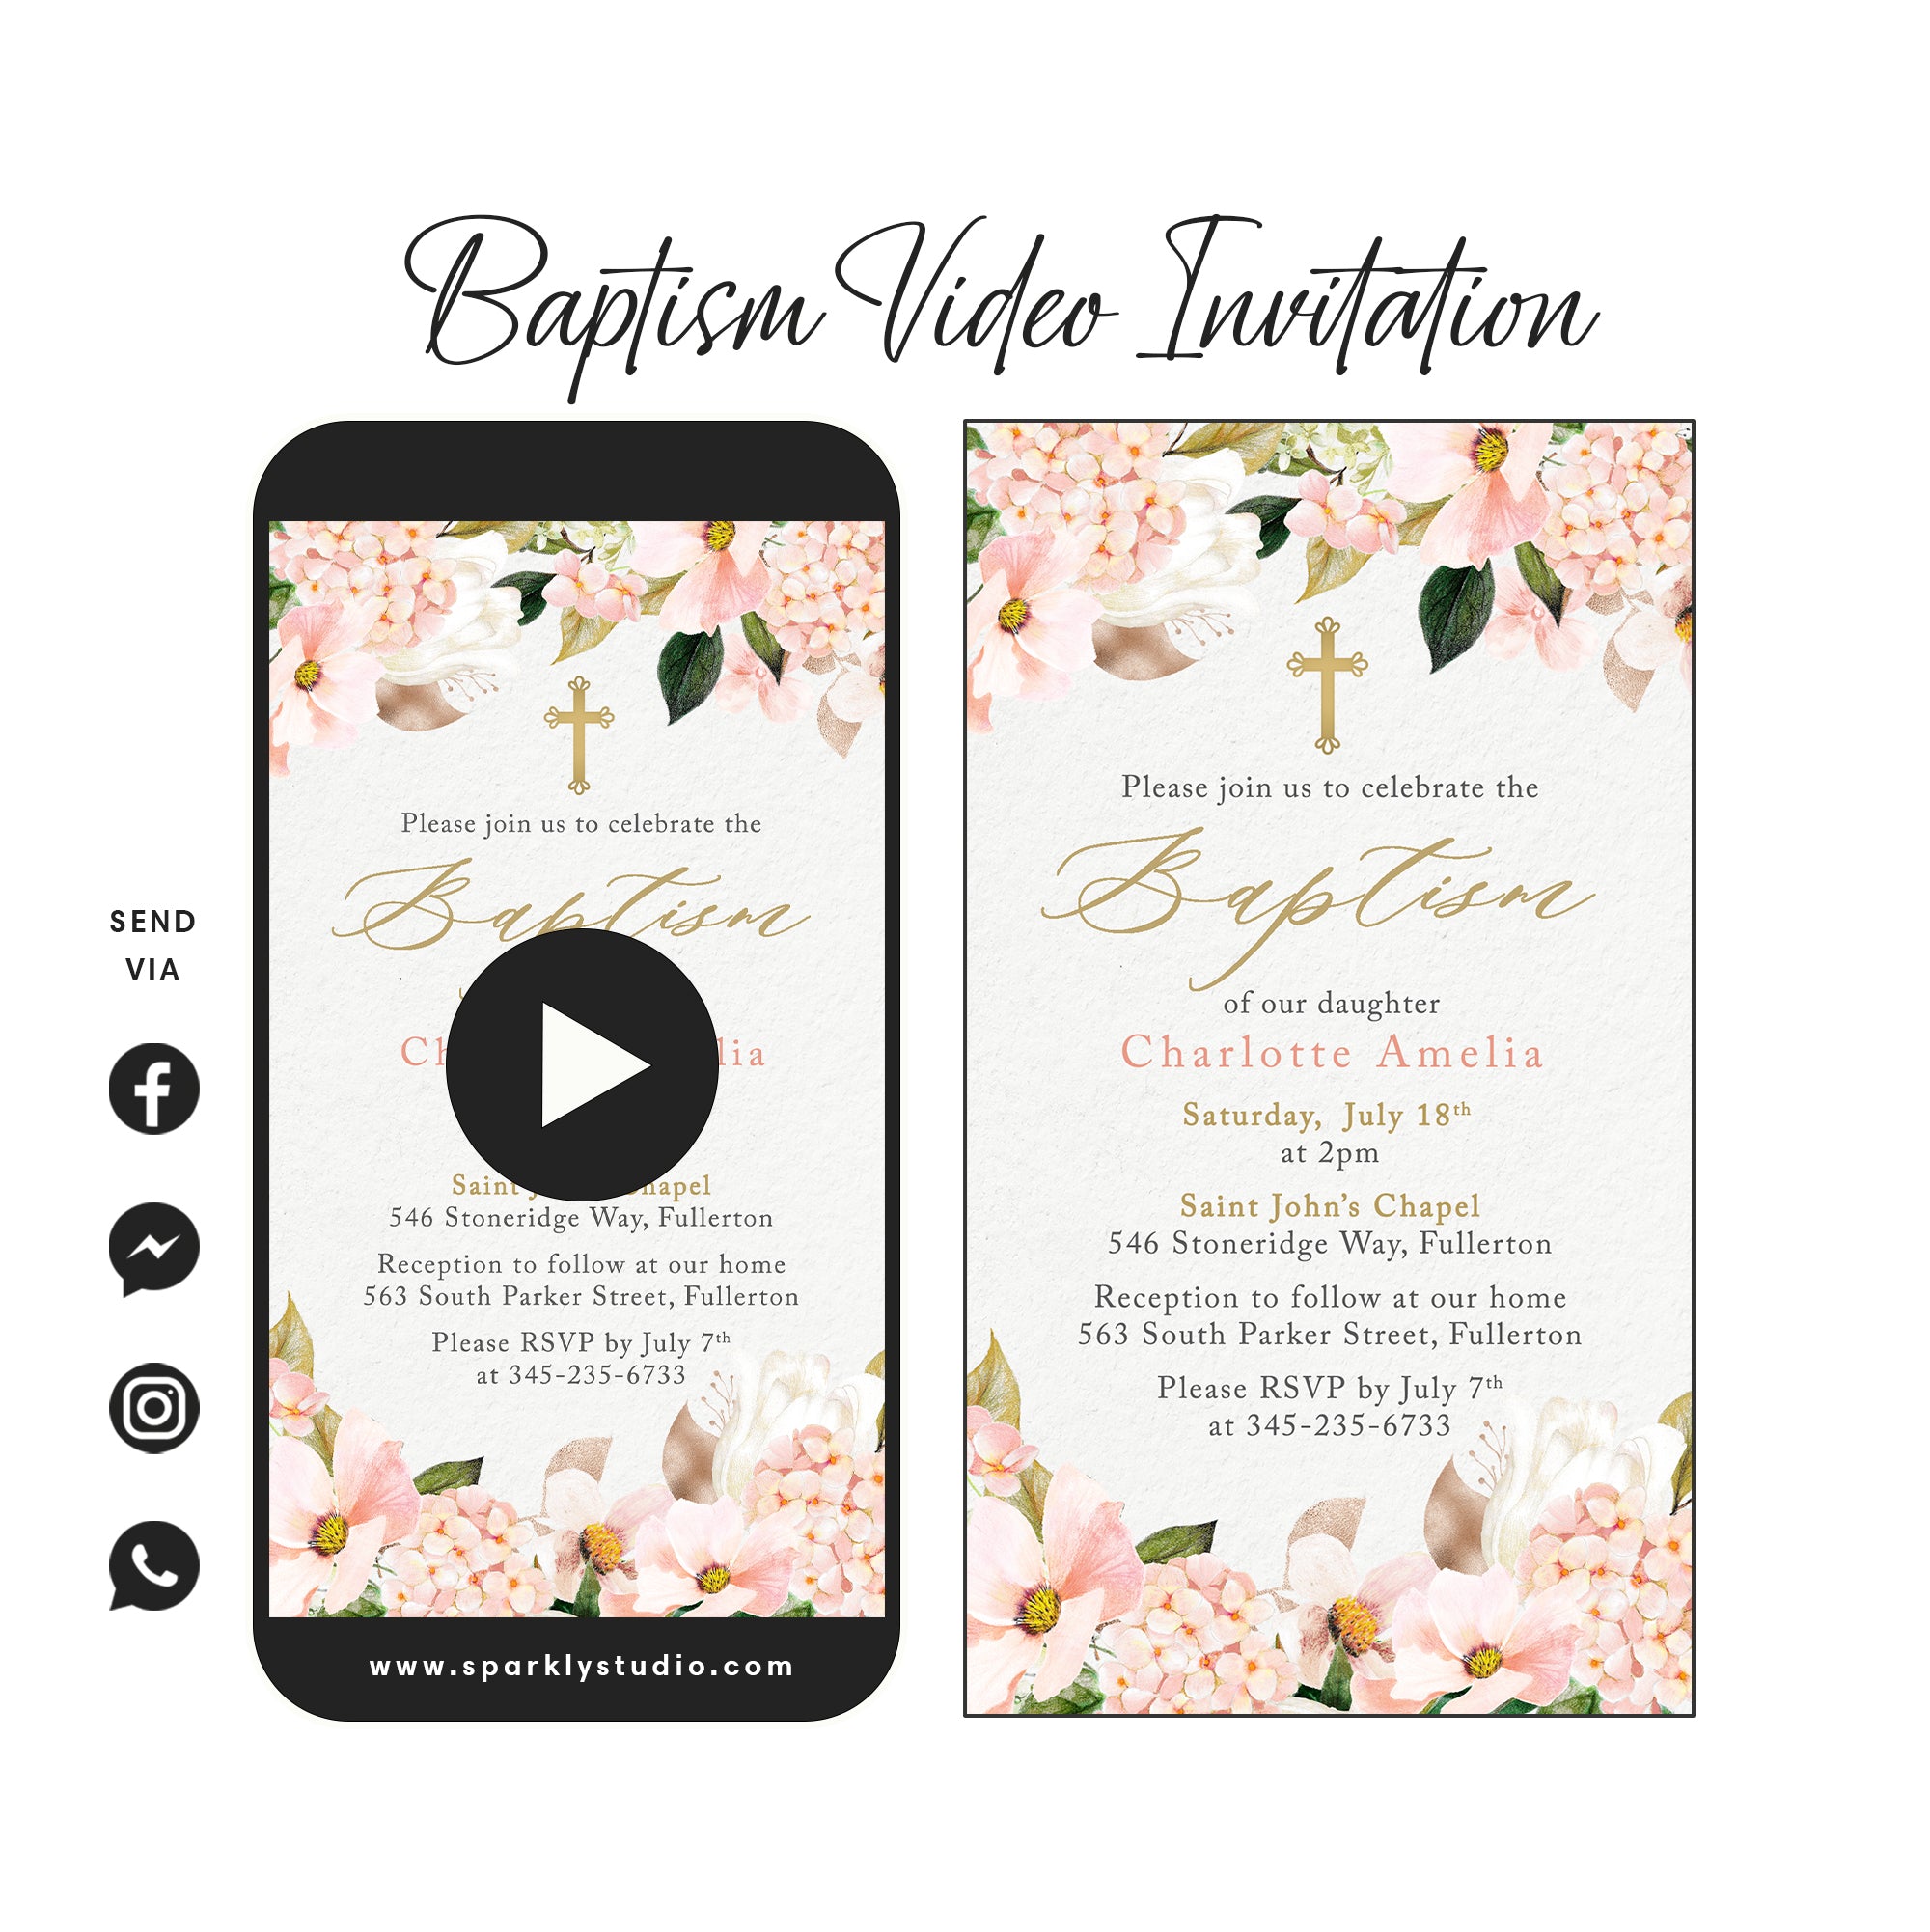 pink baptism video invitation